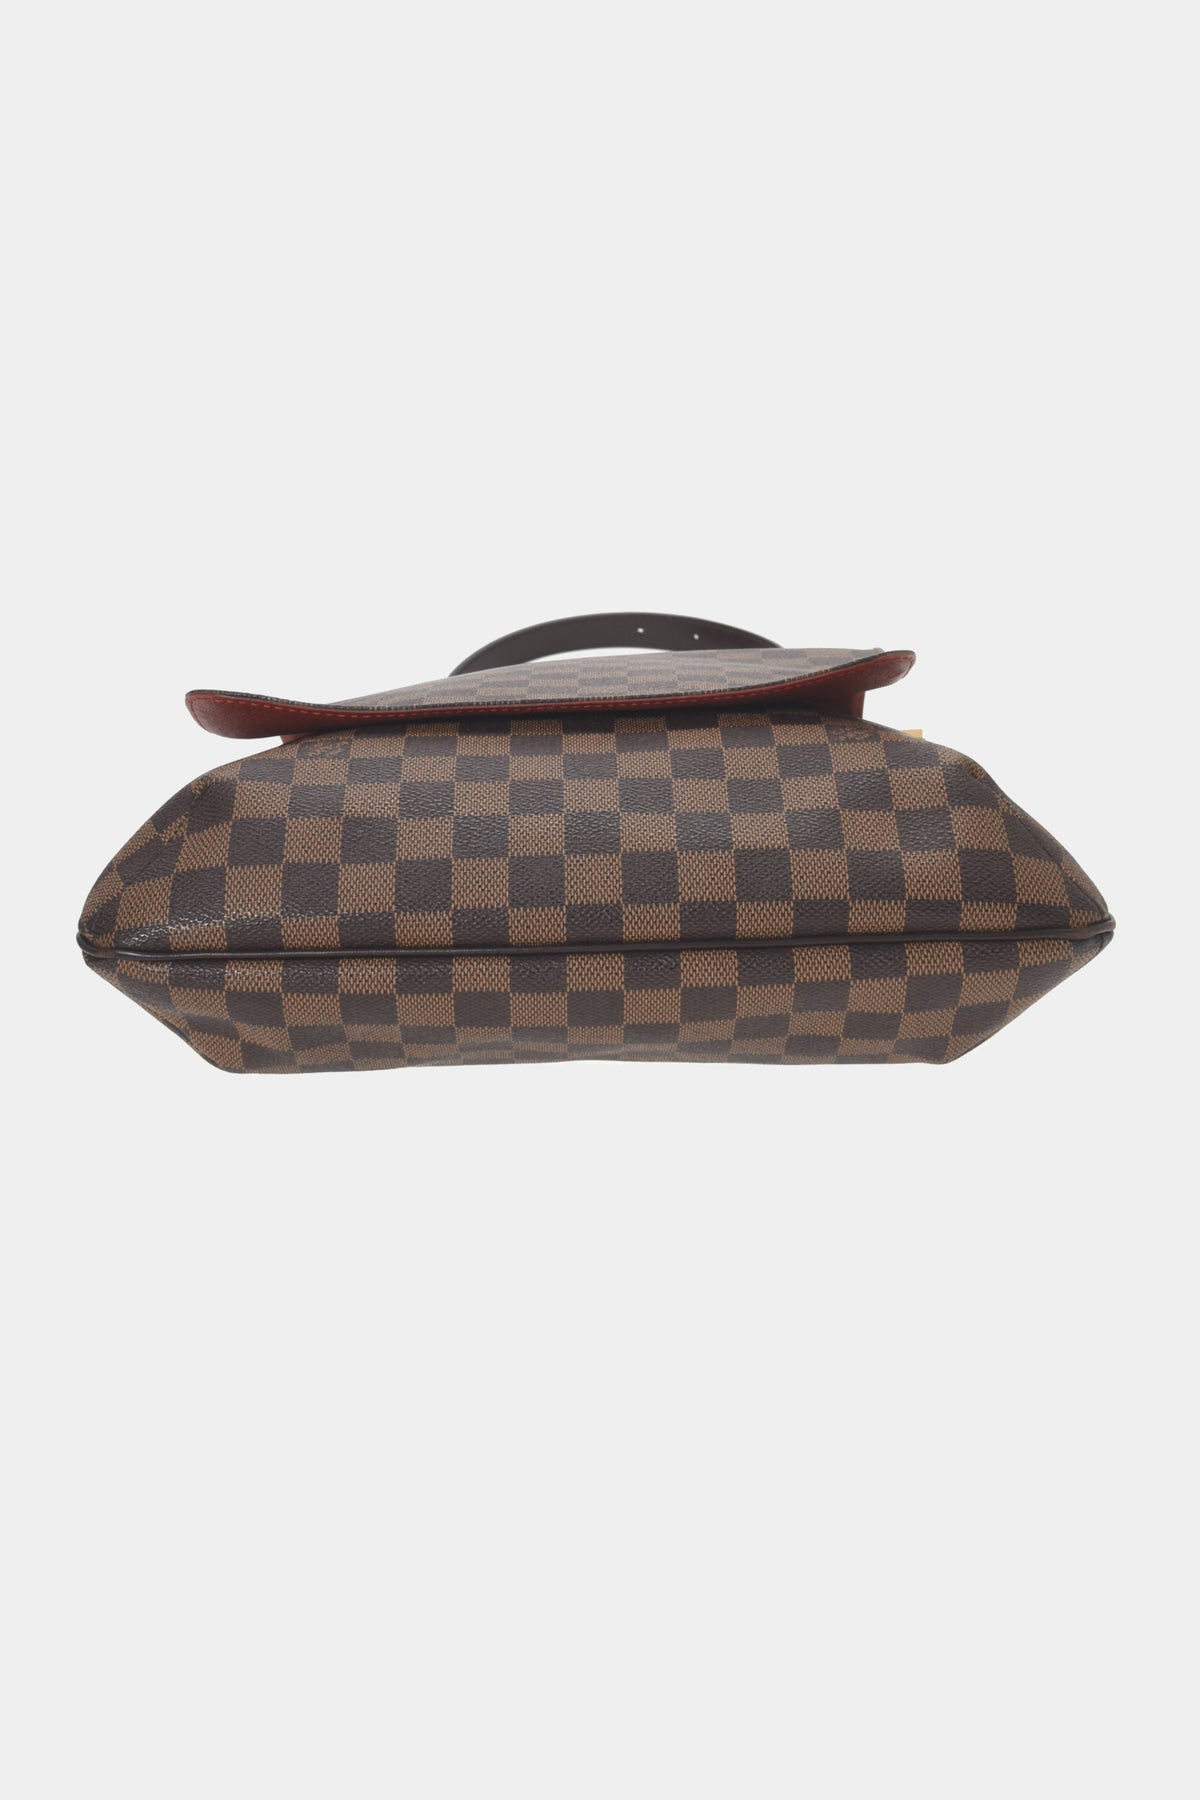 Louis Vuitton Brooklyn PM Damier Ebene Crossbody Bag in Brown | Lord & Taylor